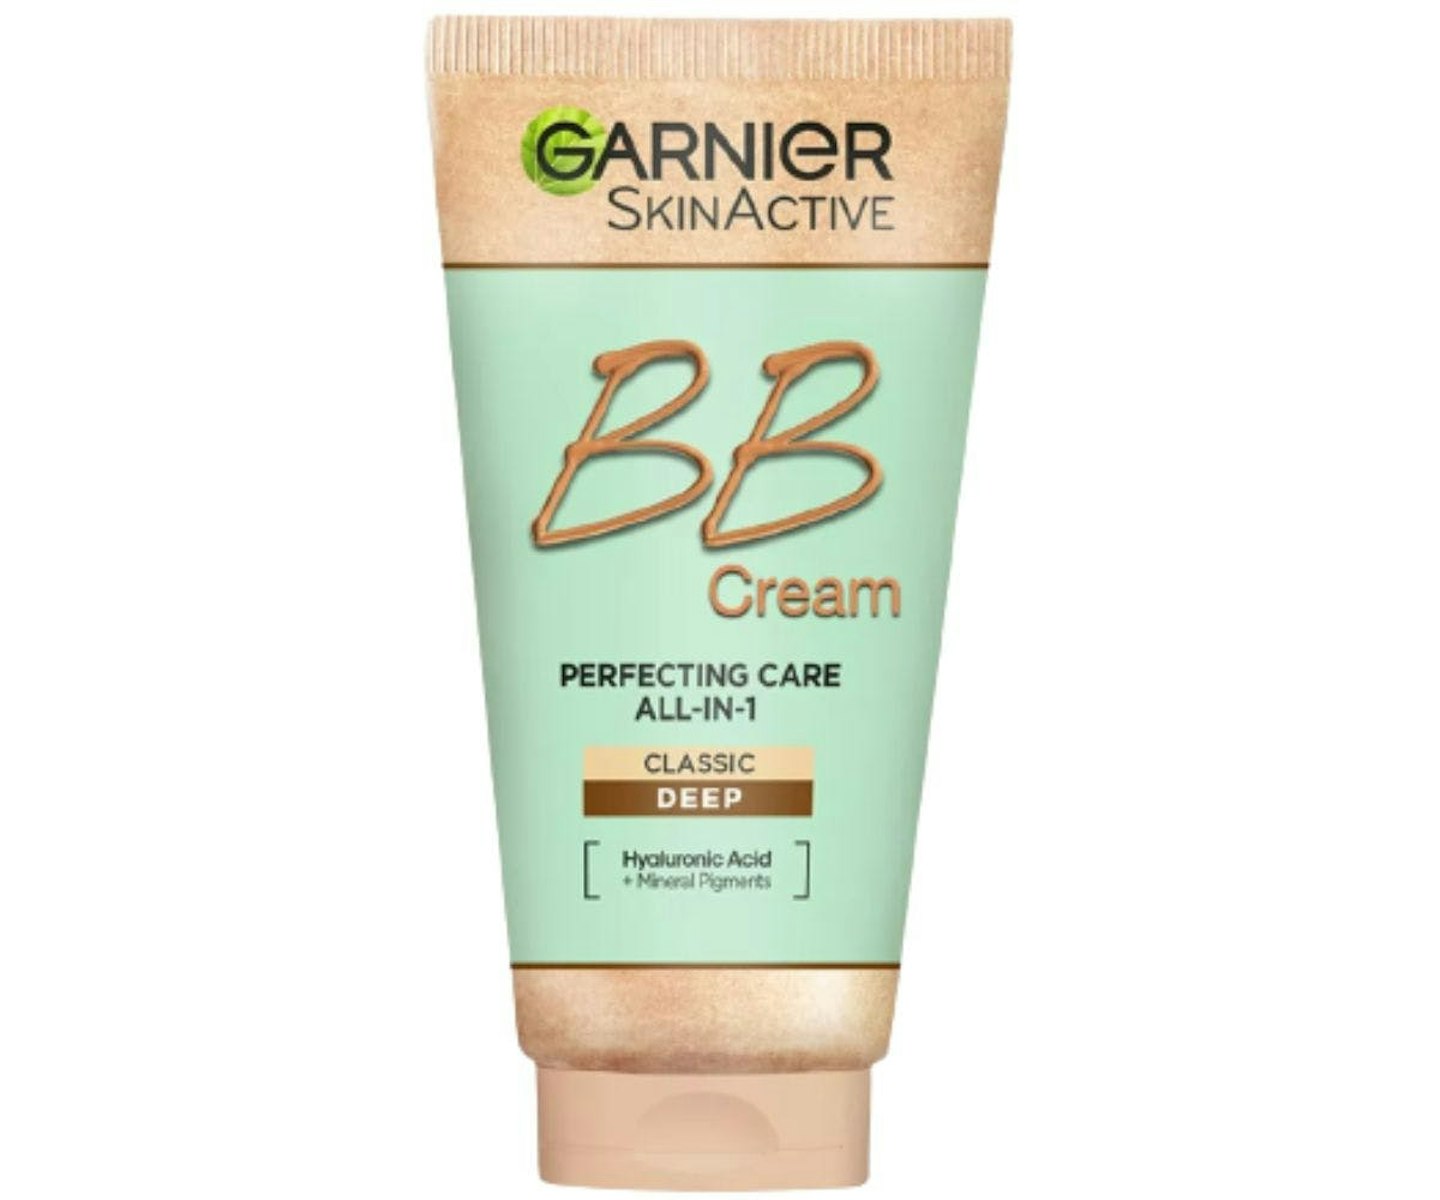 Garnier SkinActive Anti-Age BB Cream